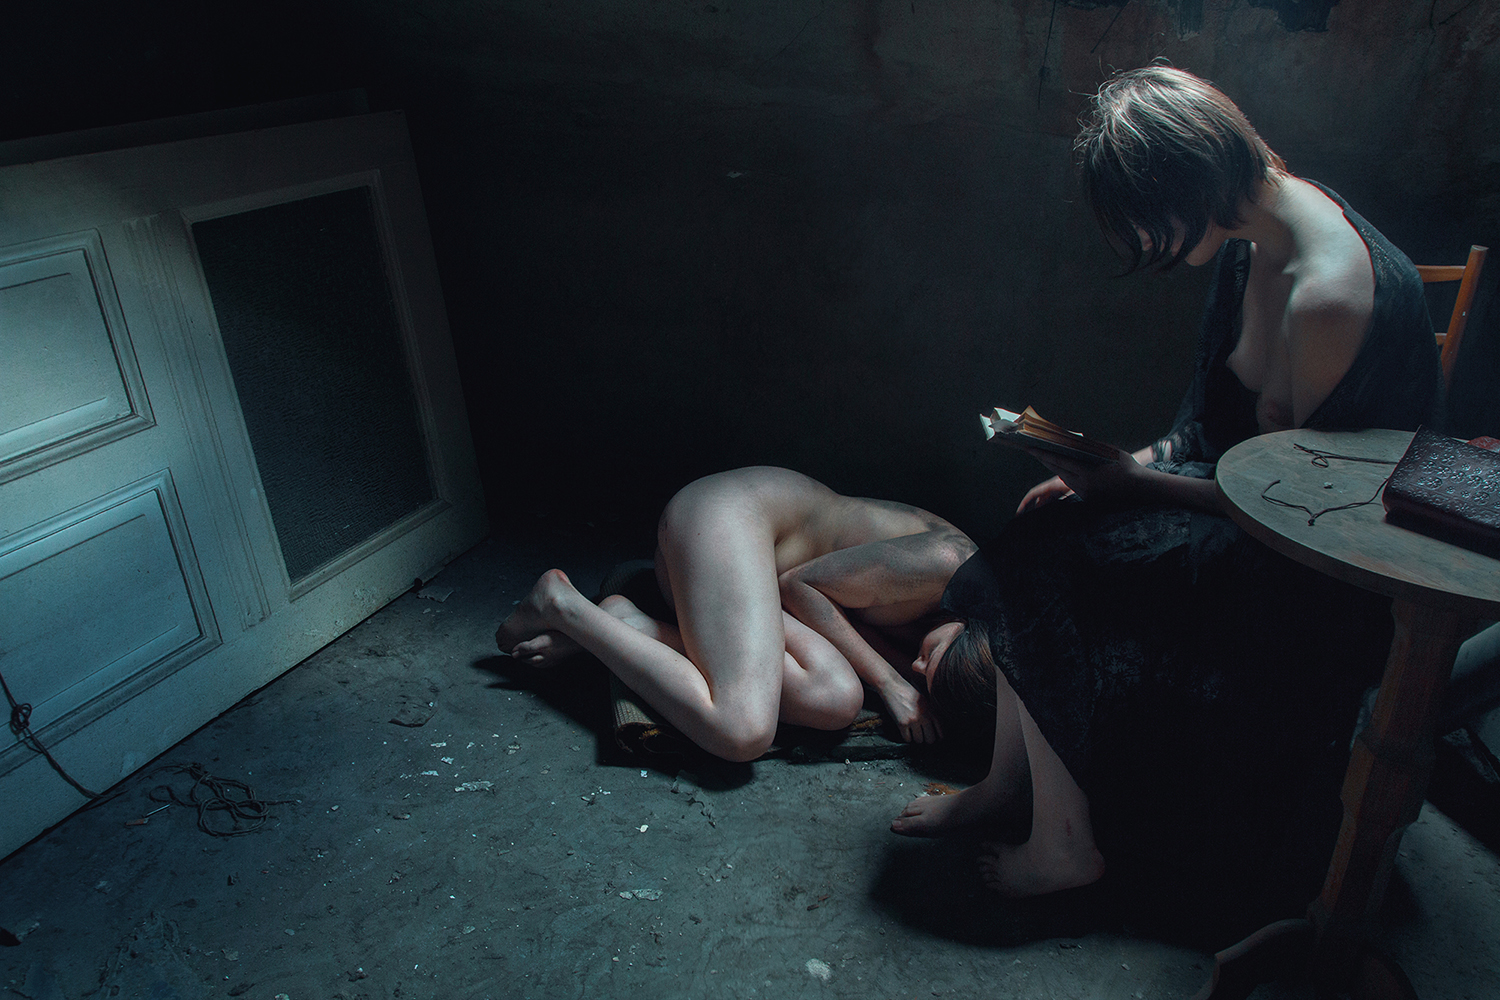 Elena Helfrecht, Calm - nude women sitting in darkened room